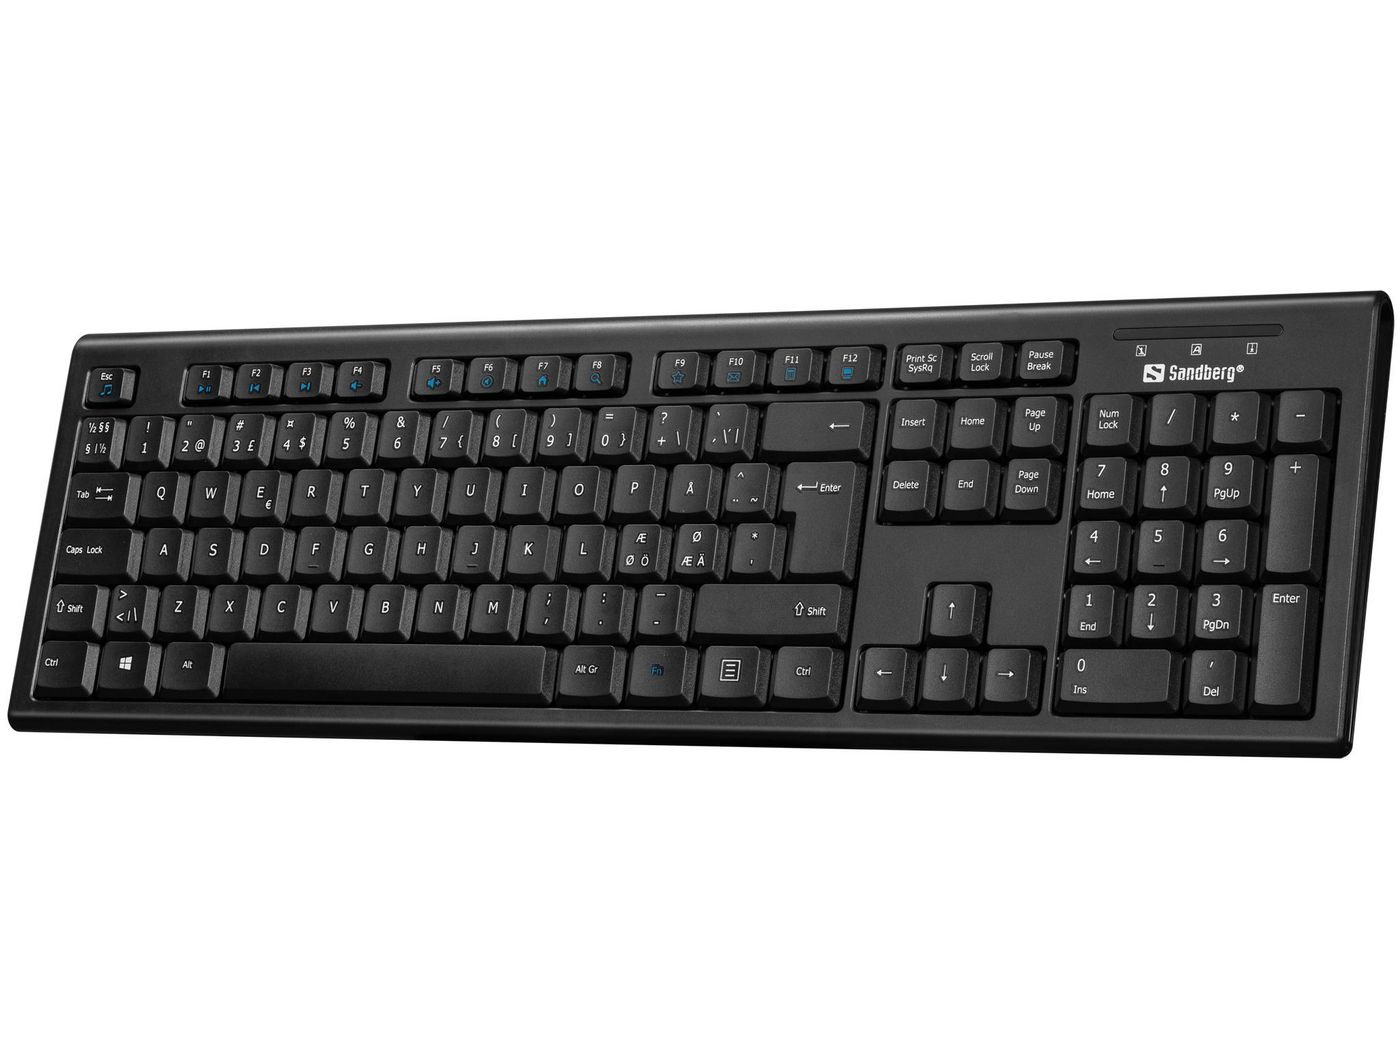 Sandberg 631-10 Wired USB Office Keyboard Nord 